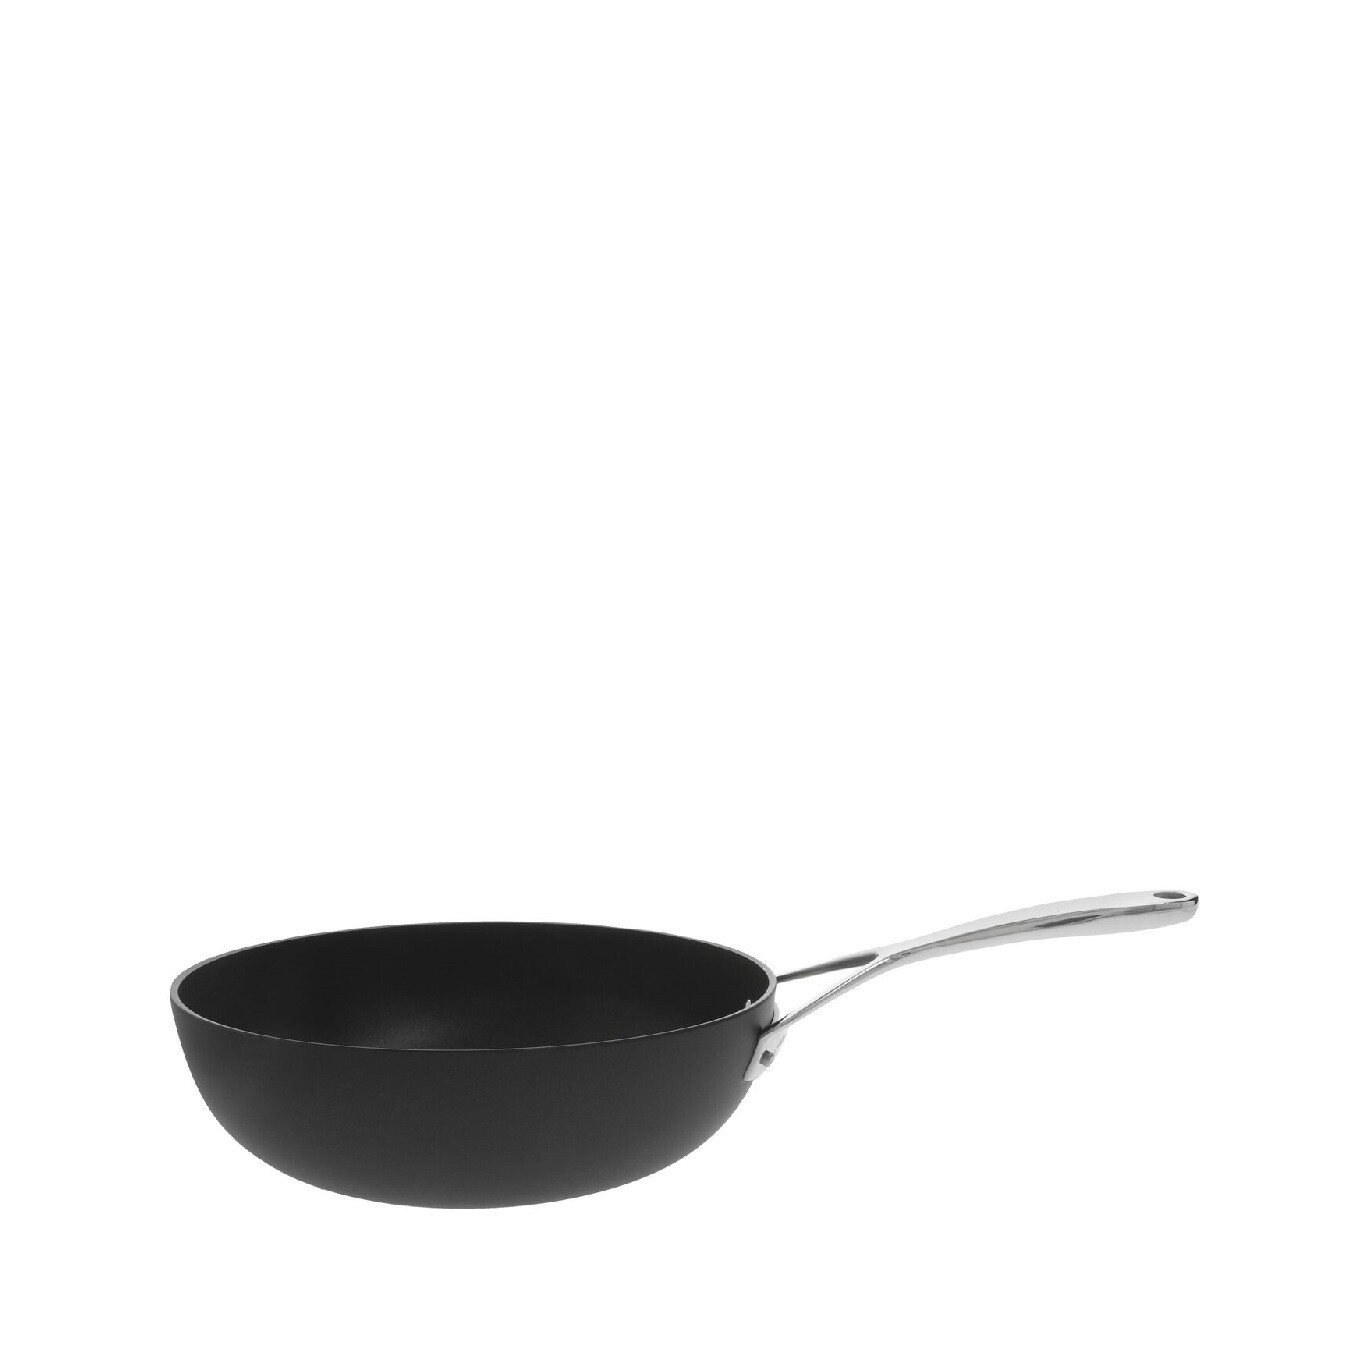 DEMEYERE 'alu plus 3 duraslide' antikleef wokpan 28cm  PROMO 89,00 -20%